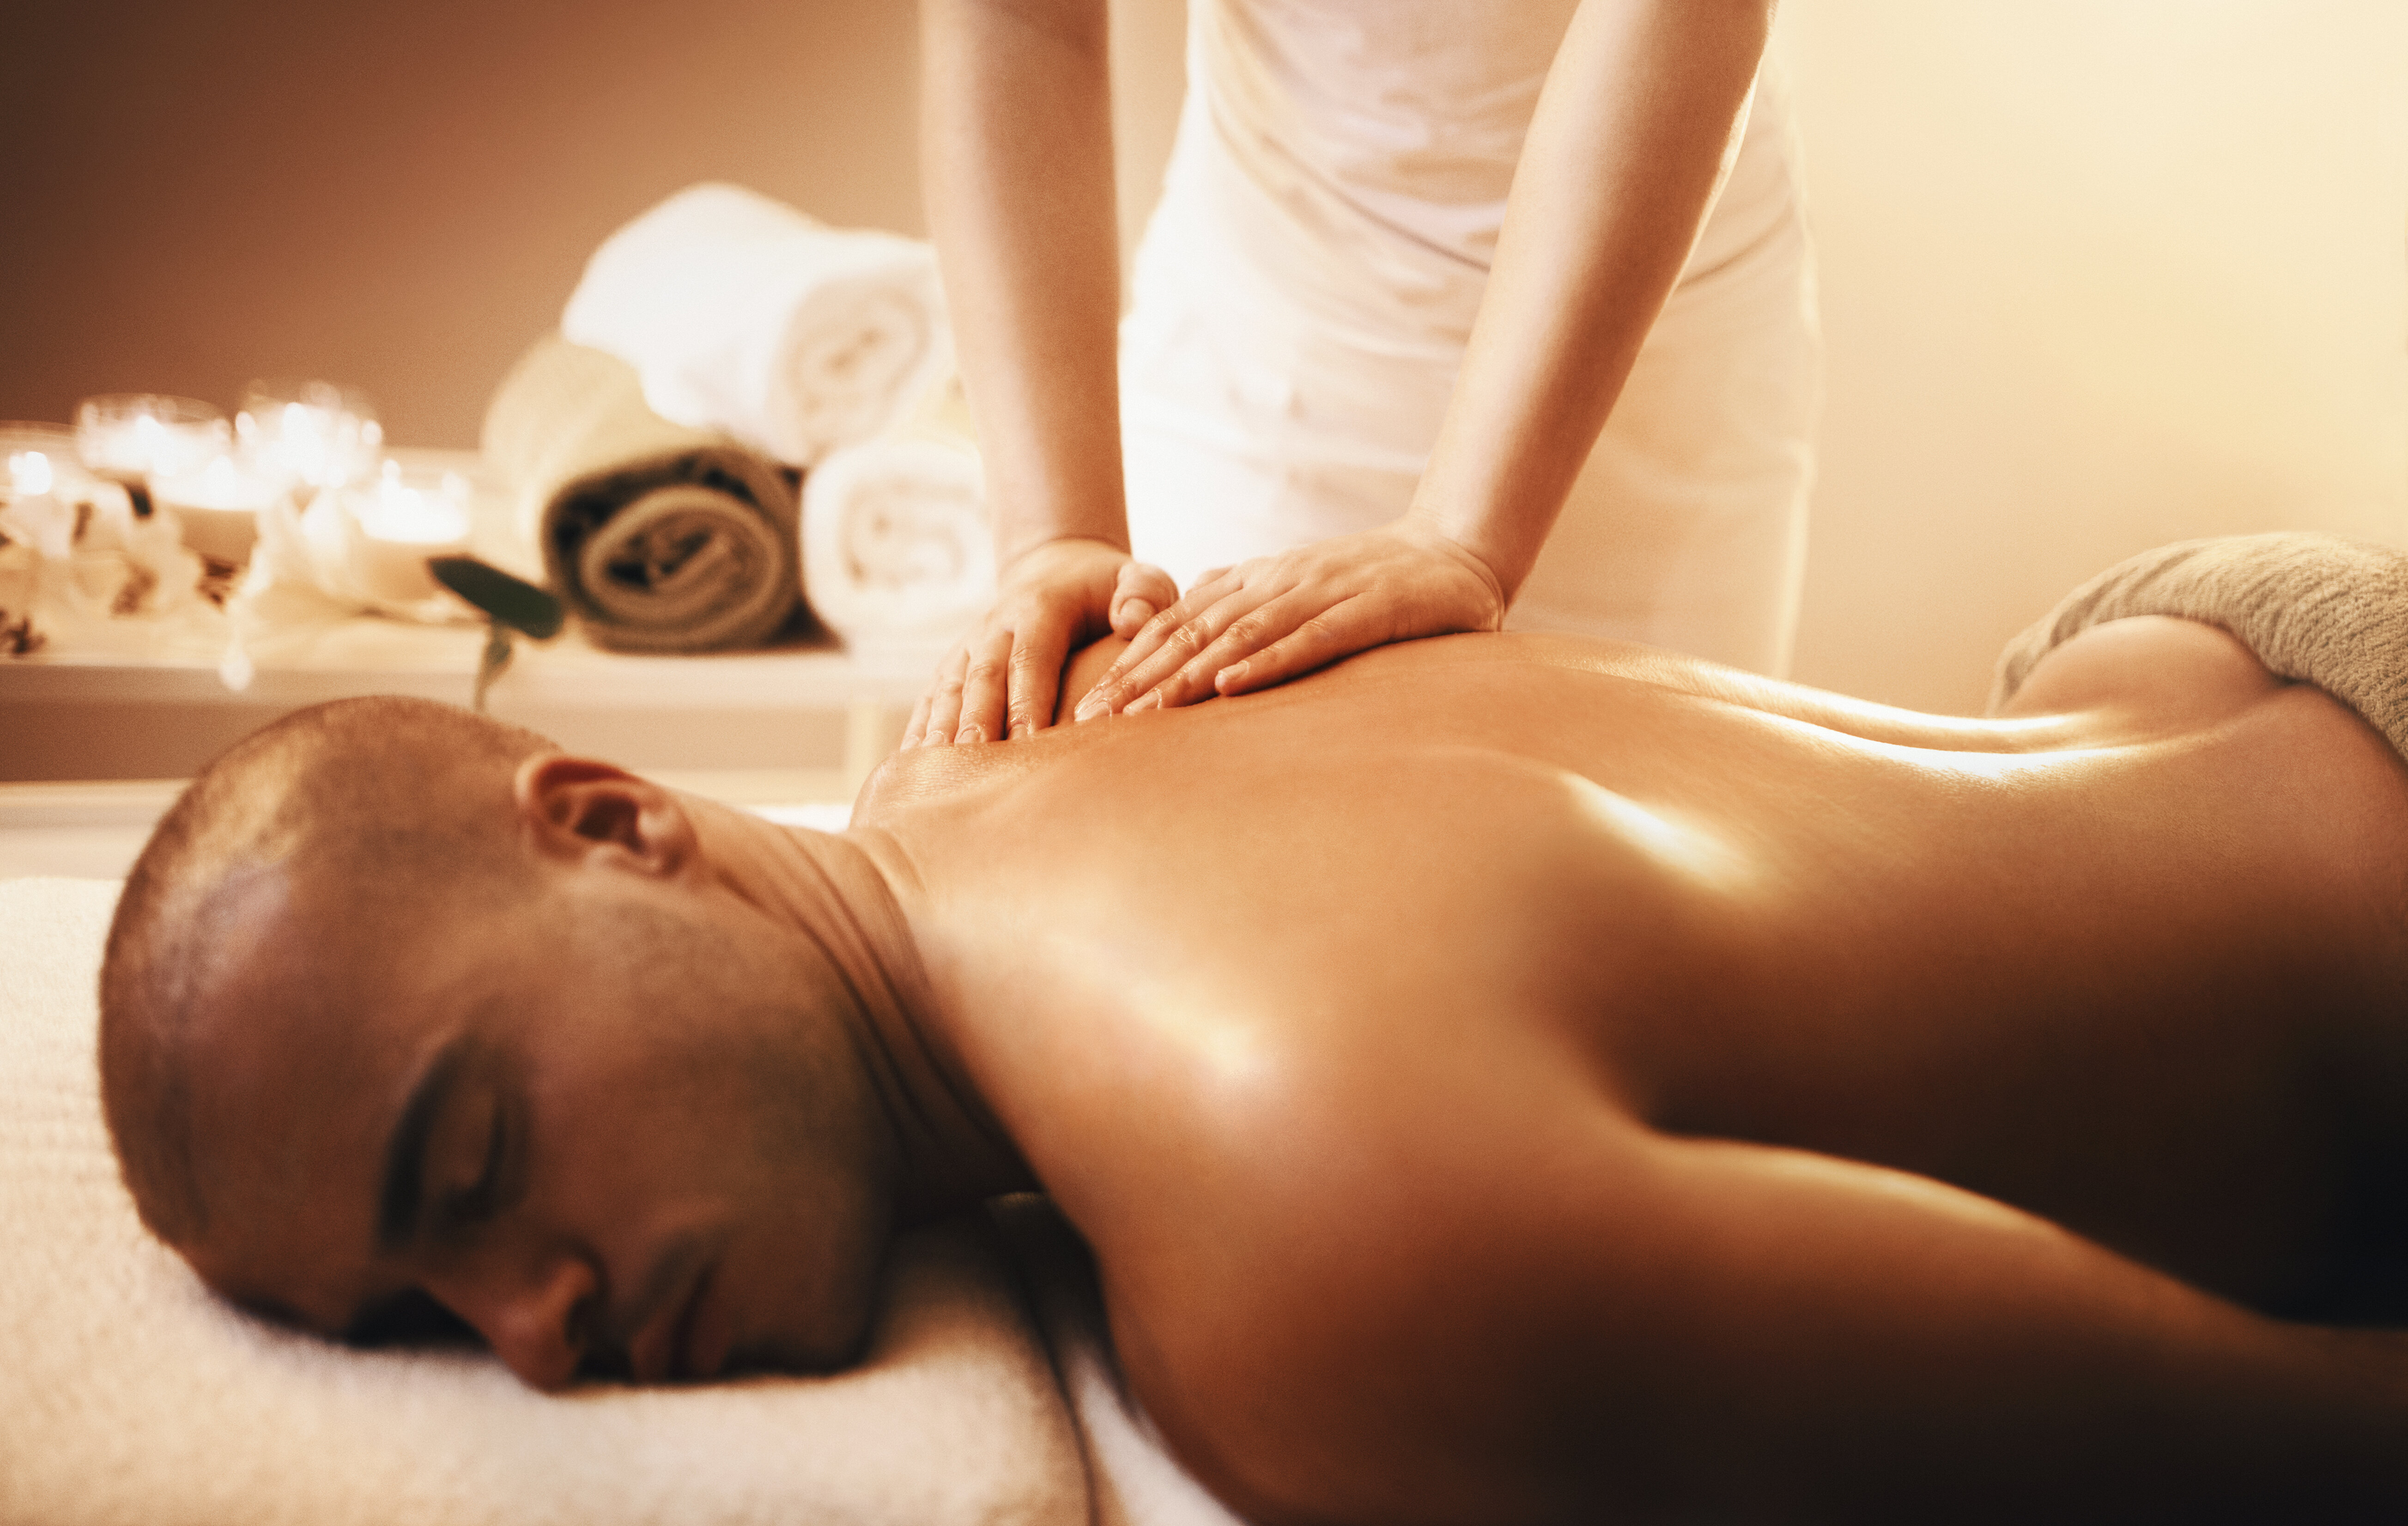 Mp4 massage. Массаж релаксирующий для мужчин. Спа массаж для мужчин. Релакс массаж для мужчин. Массаж картинки.